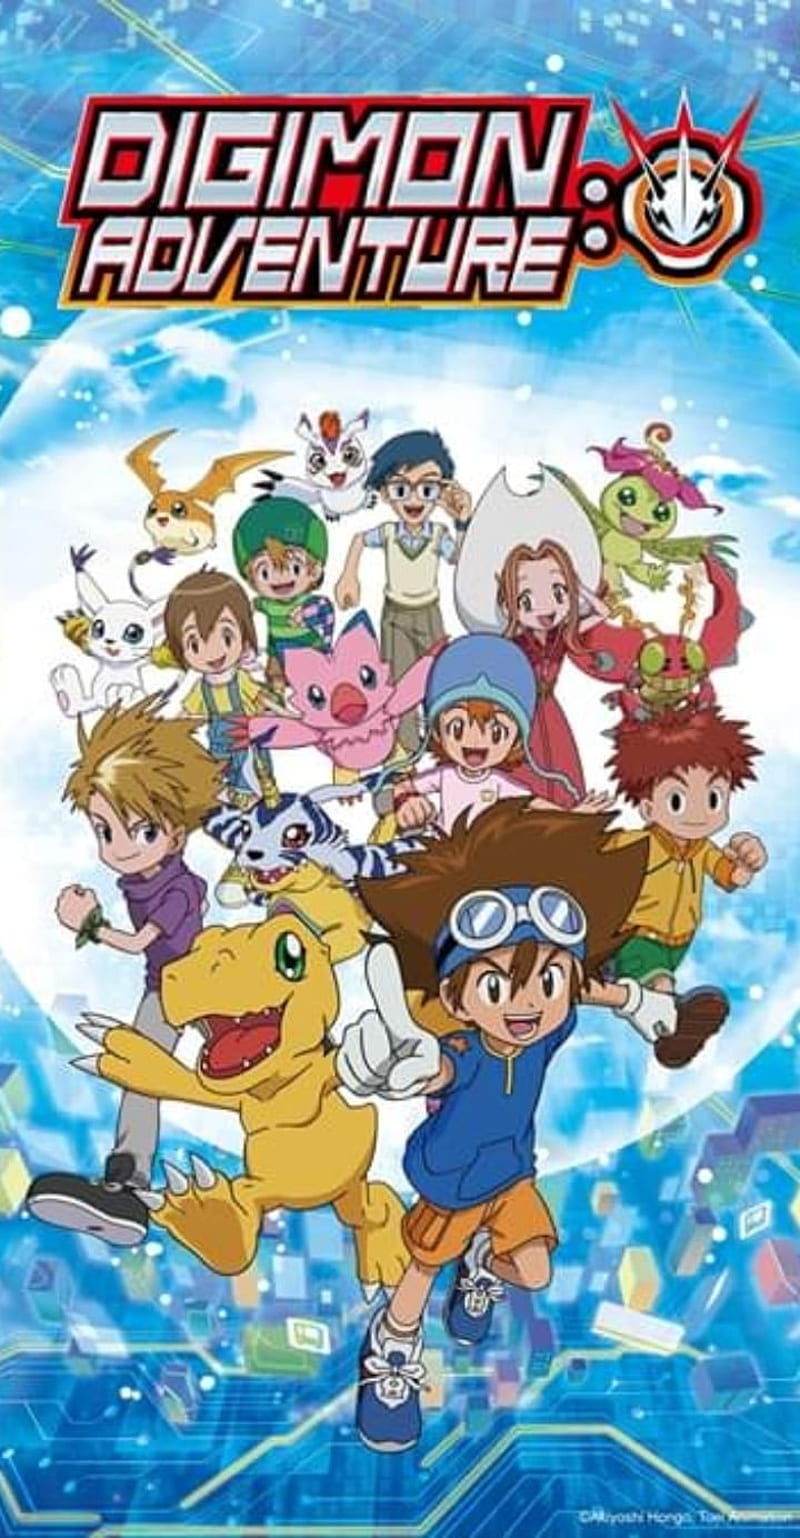 1920x1080px, 1080P free download | Digimon, adventure, agumon, digiegg ...